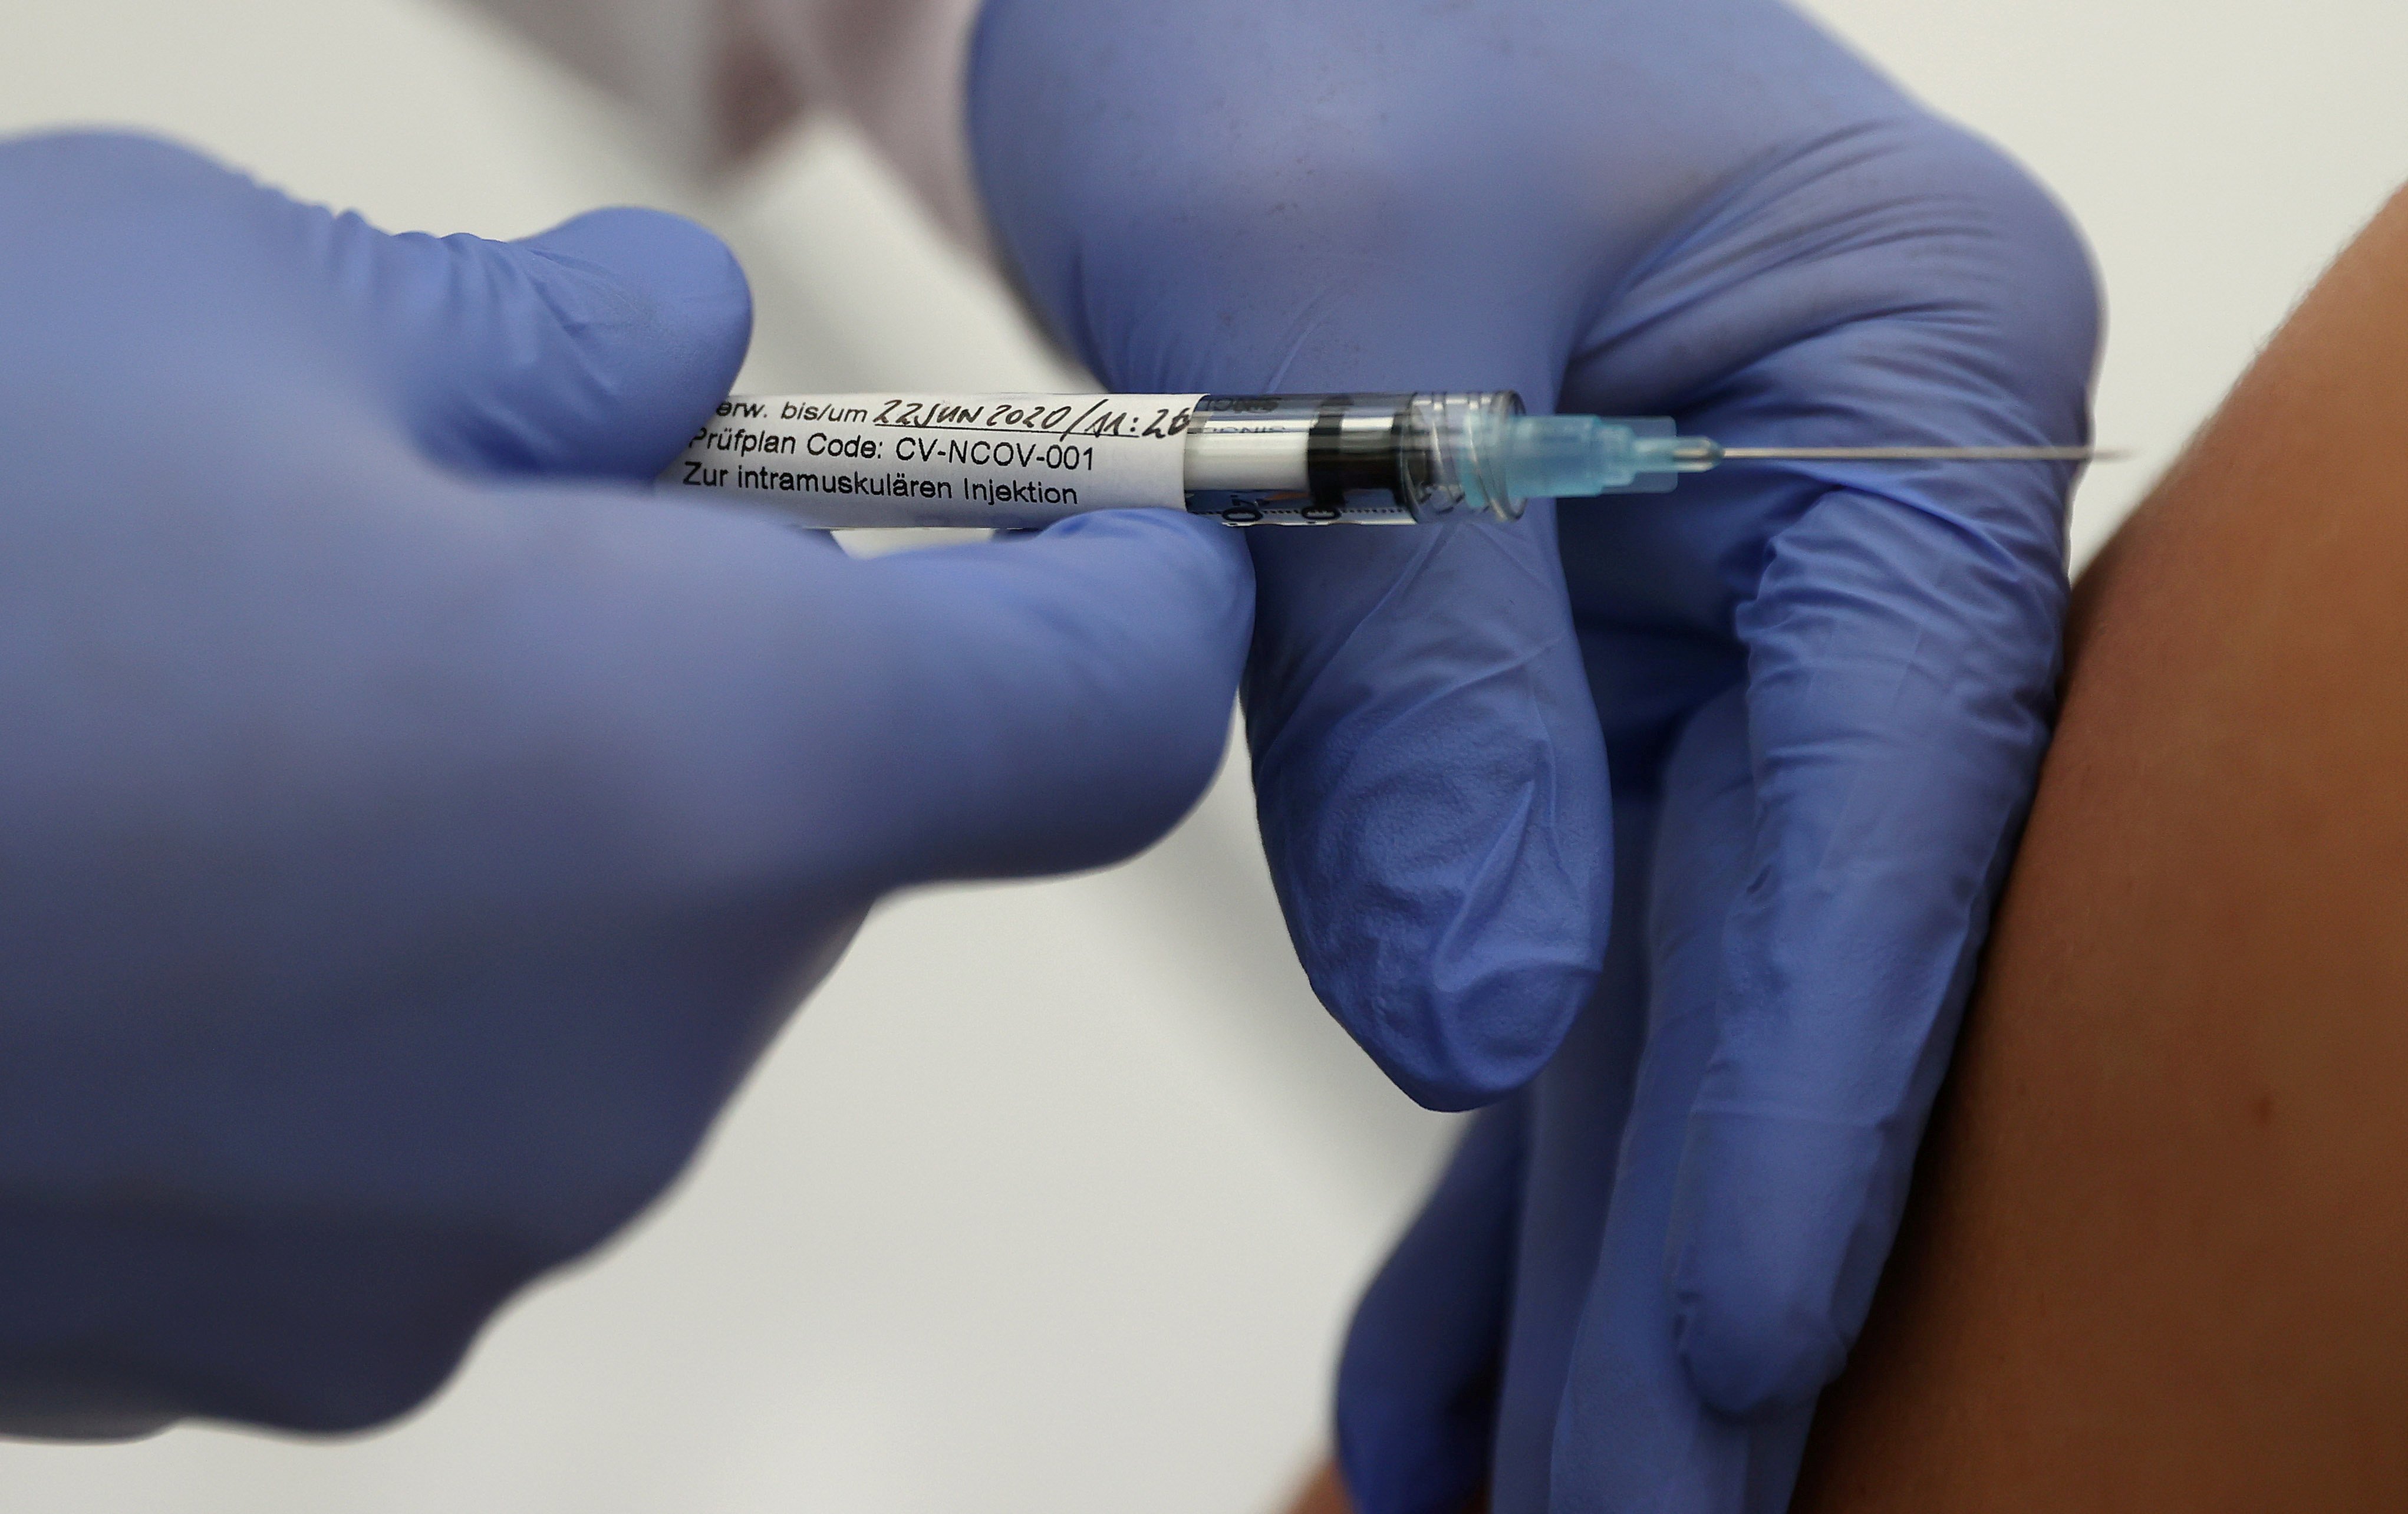 Europa comença a estudiar la vacuna de CureVac contra la Covid